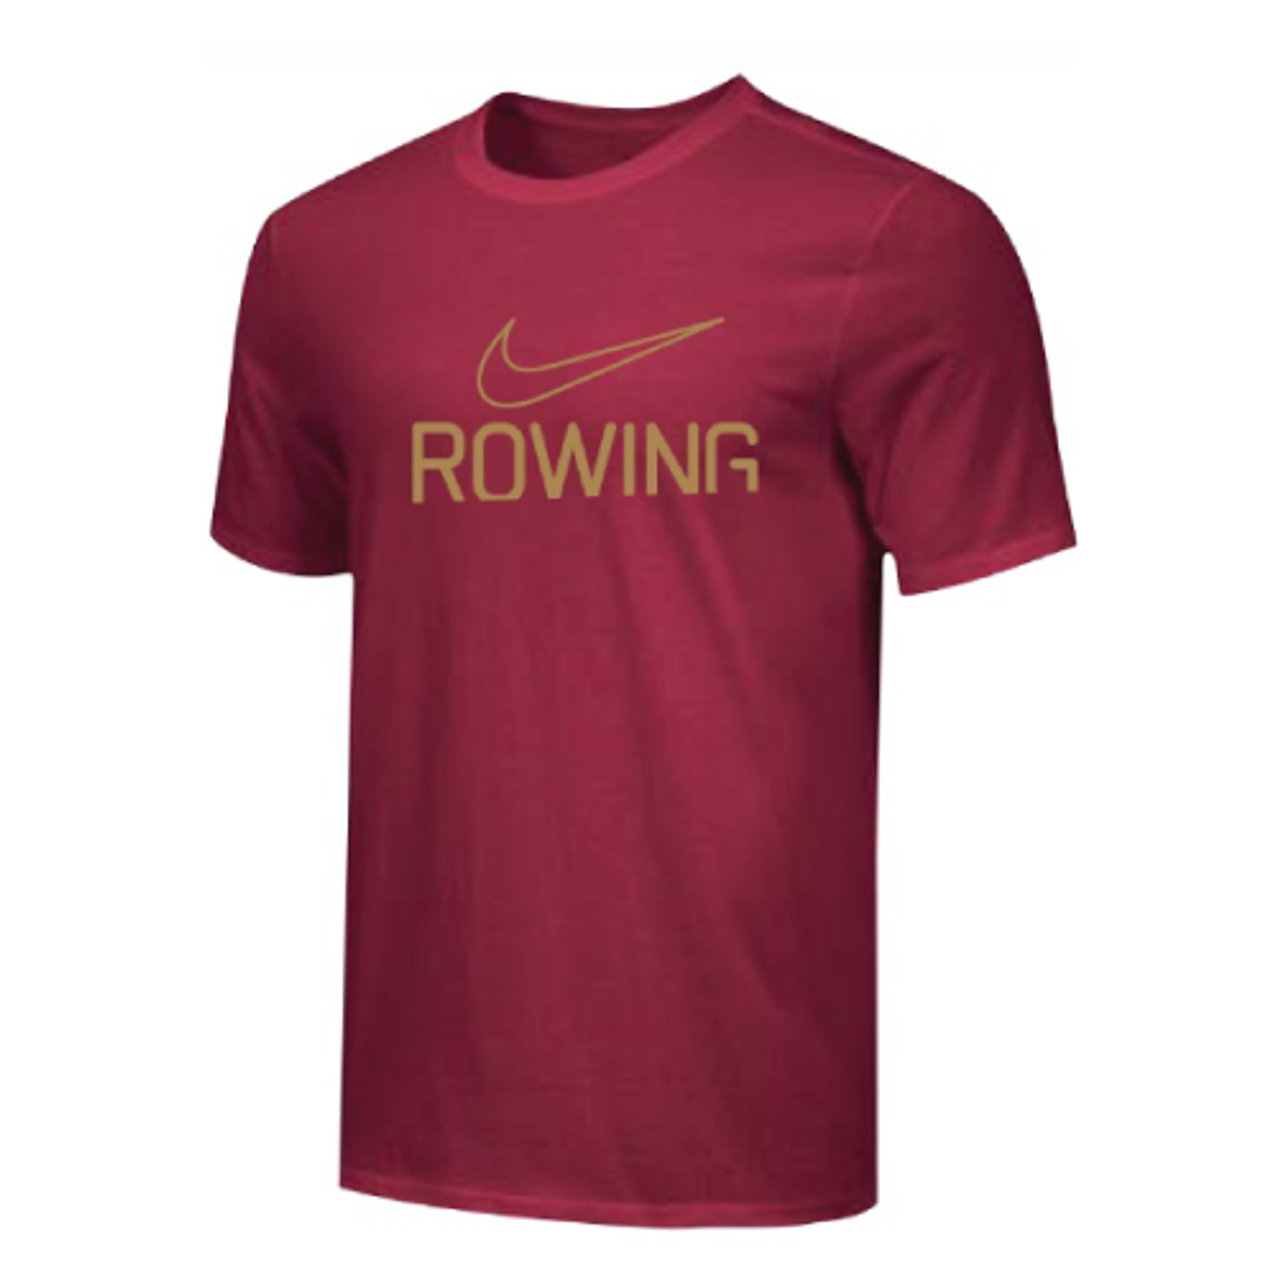 Nike Men's Rowing Gold Swoosh Tee - Red/Gold